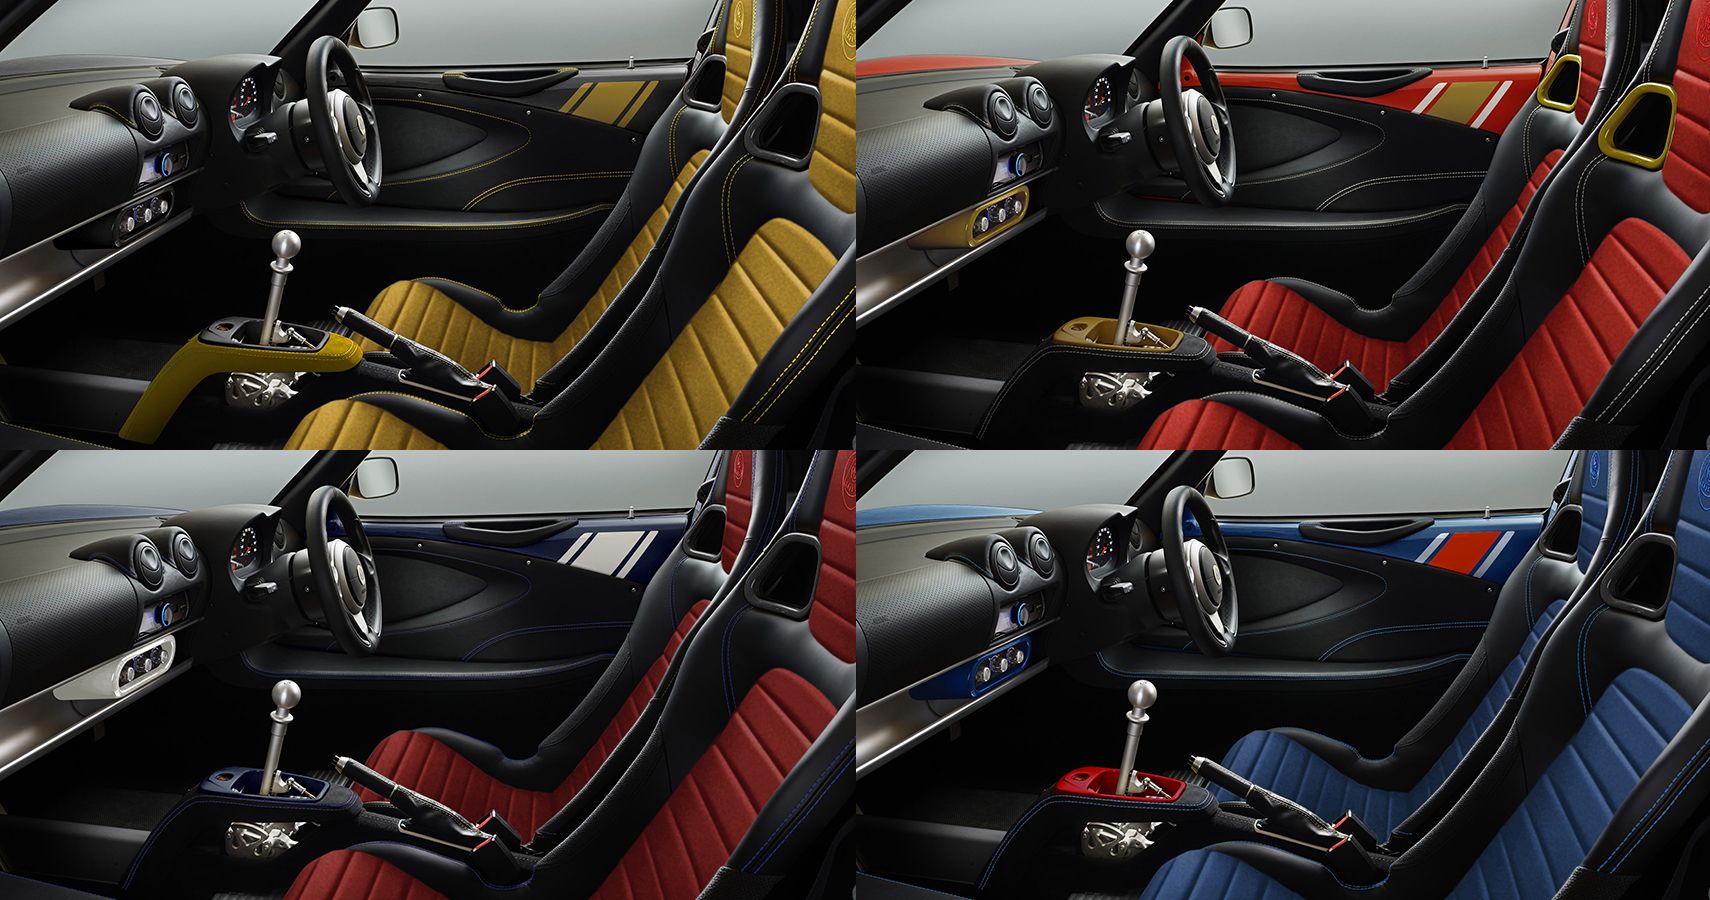 Lotus Elise Classic Heritage Edition interior